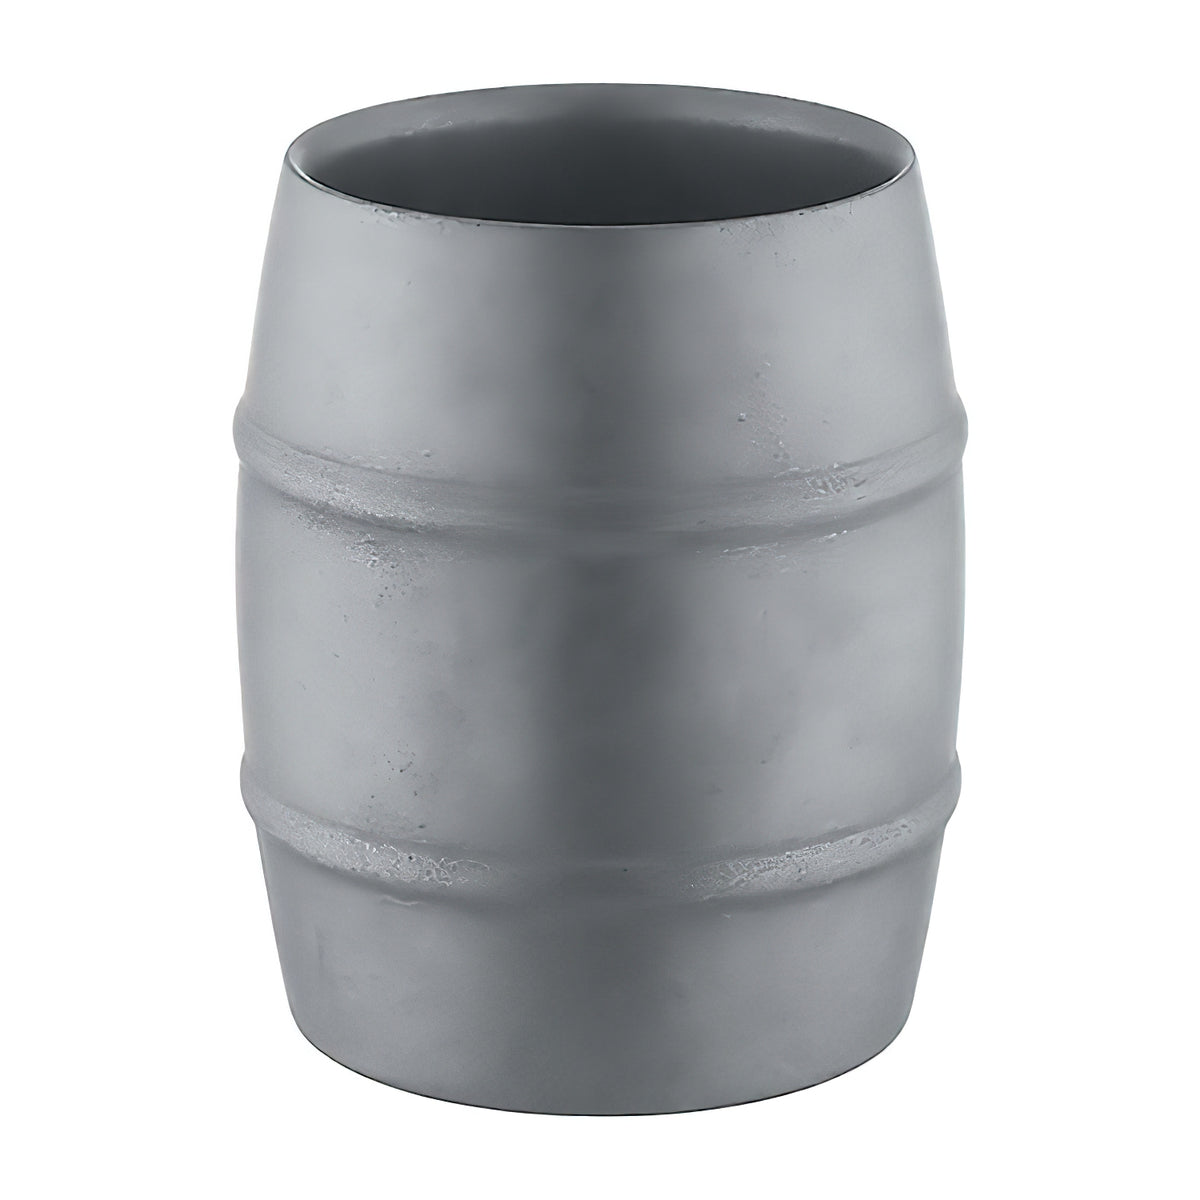 AOYOSHI VINTAGE Stainless Steel Barrel Mug